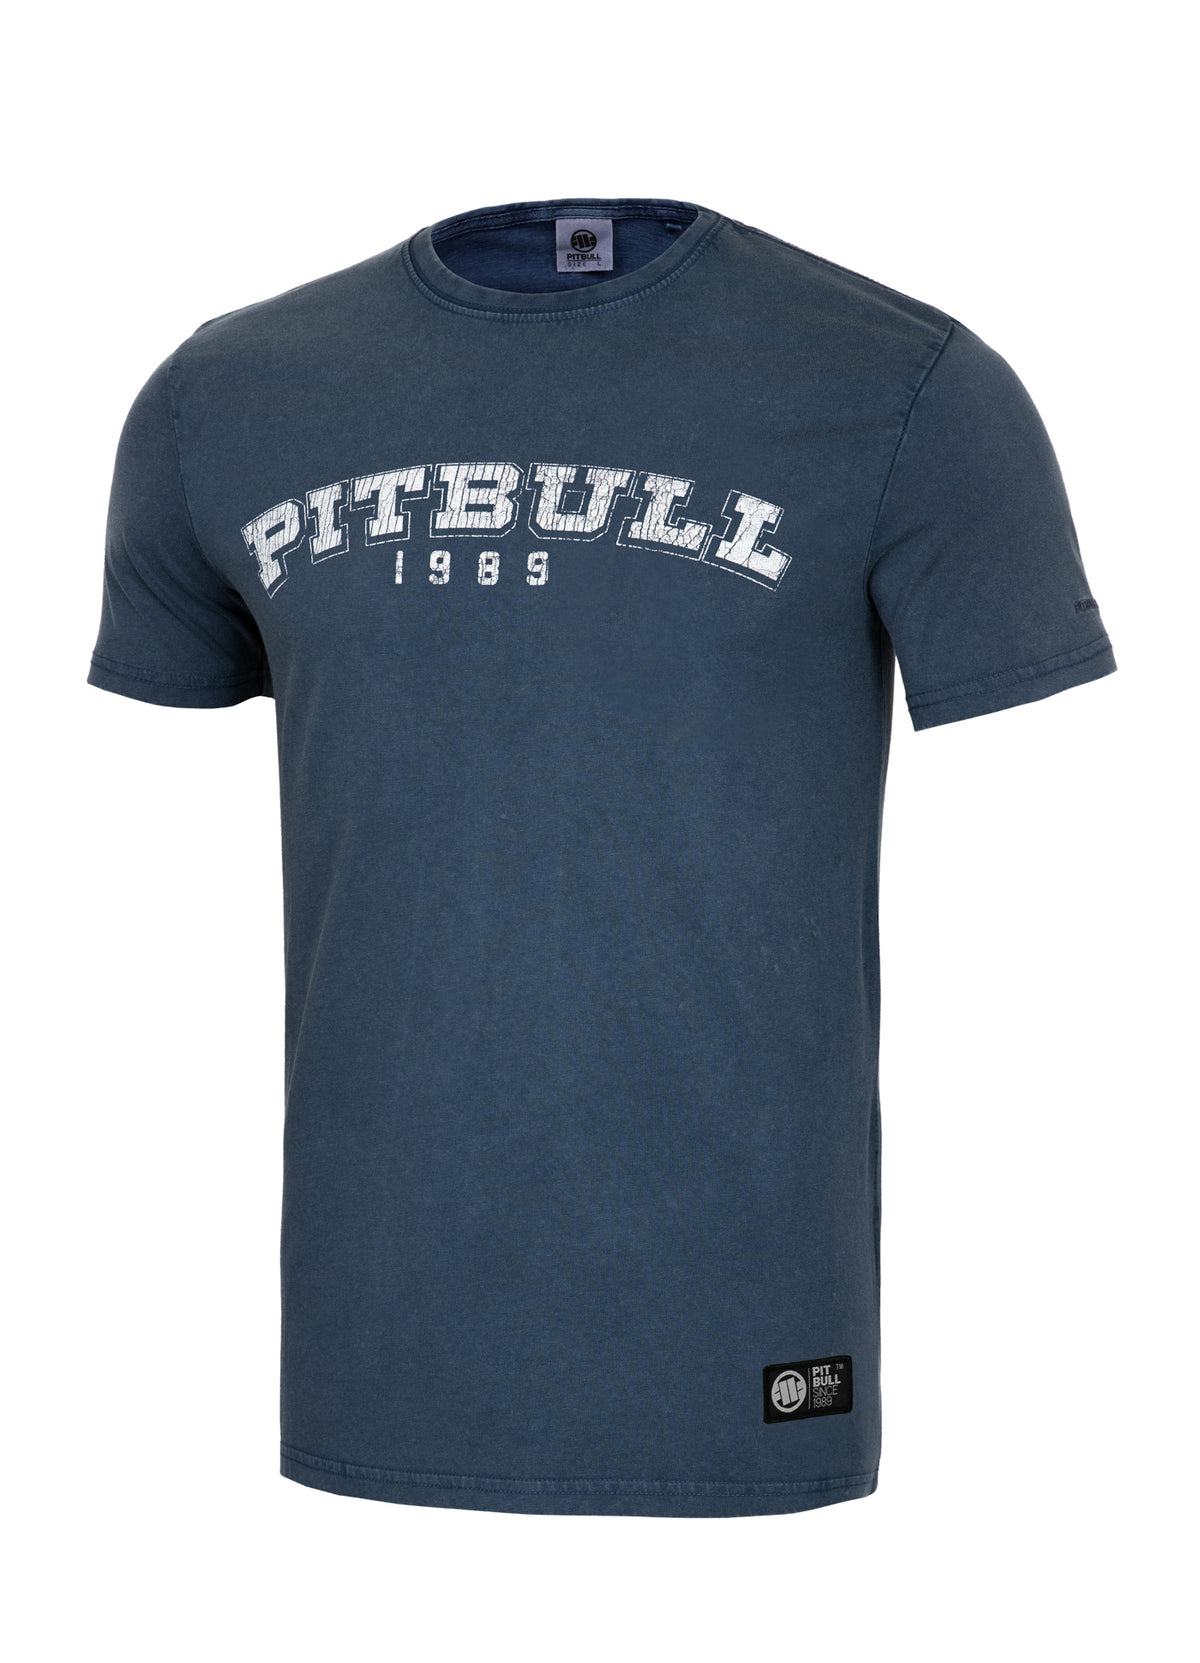 BORN IN 1989 Dark Navy T-shirt - Pitbullstore.eu